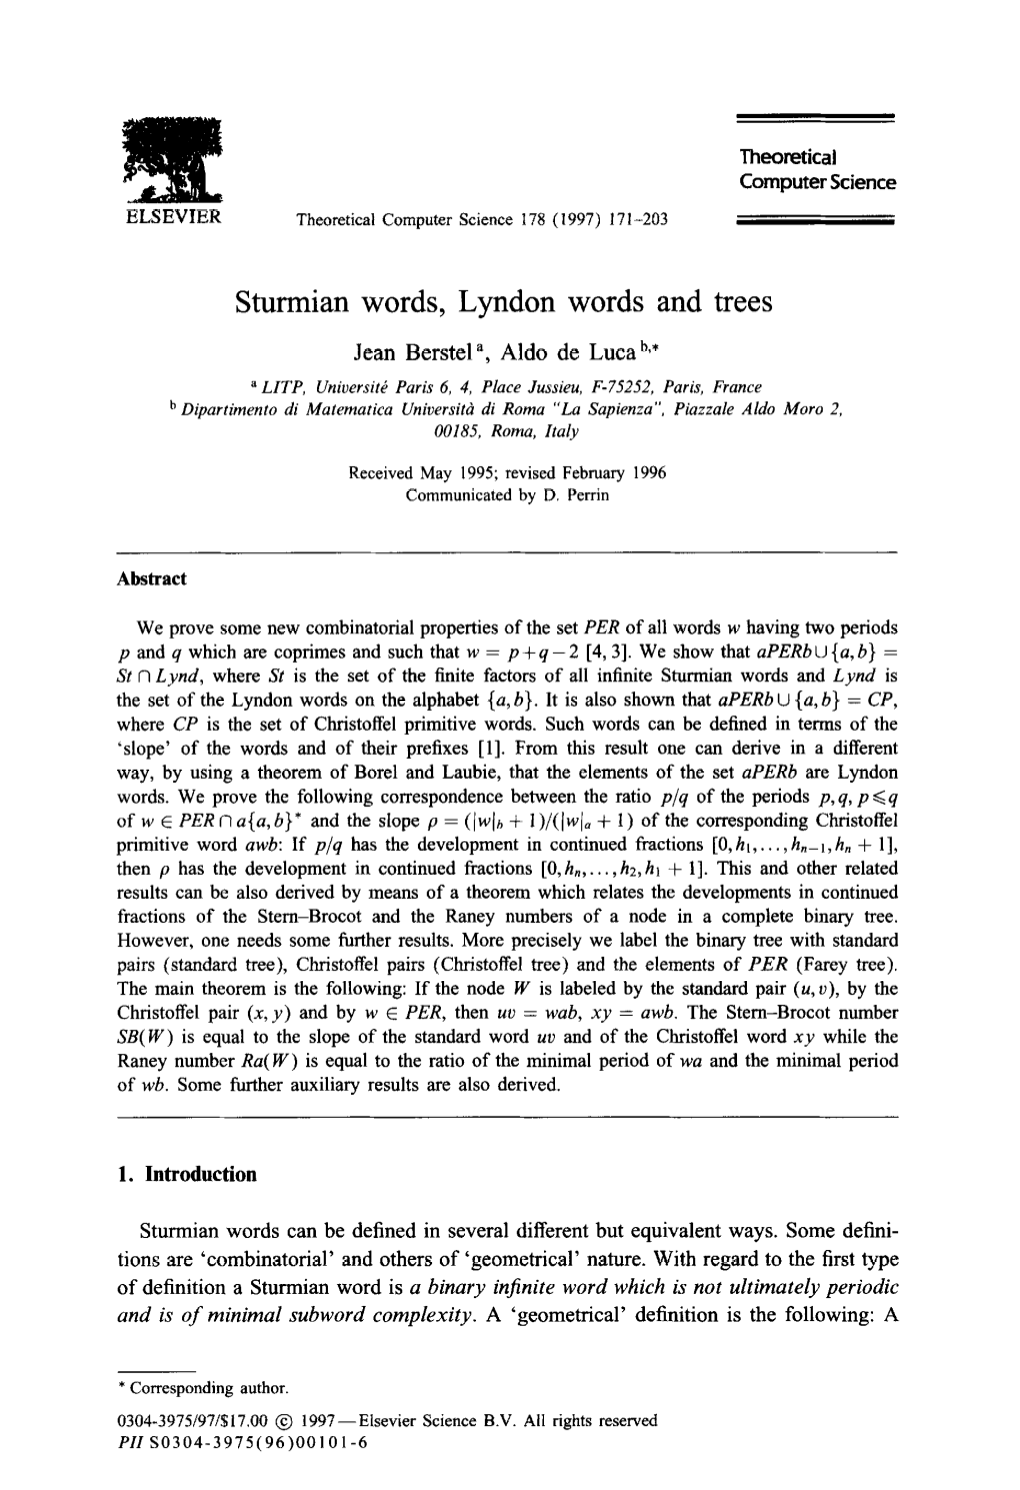 Sturmian Words, Lyndon Words and Trees